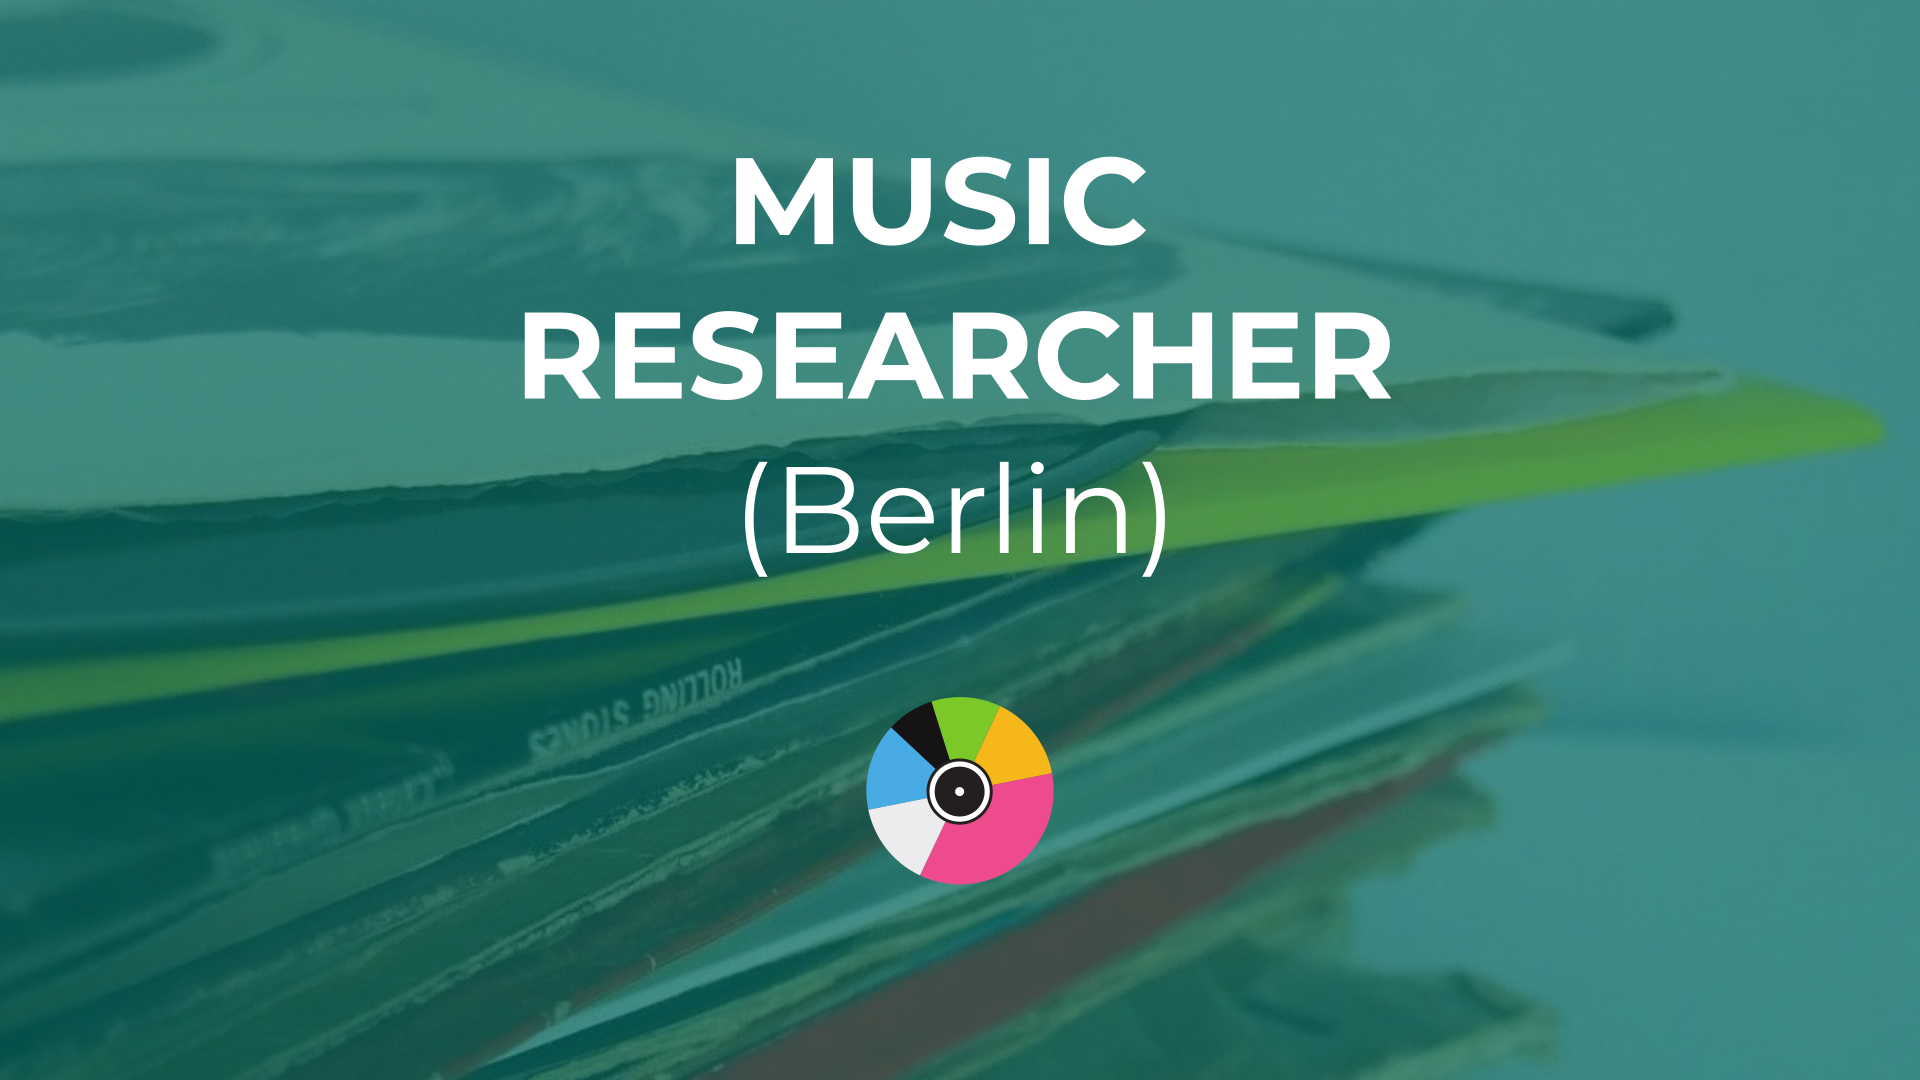 Tracks & Fields offers a music Researcher position in Berlin